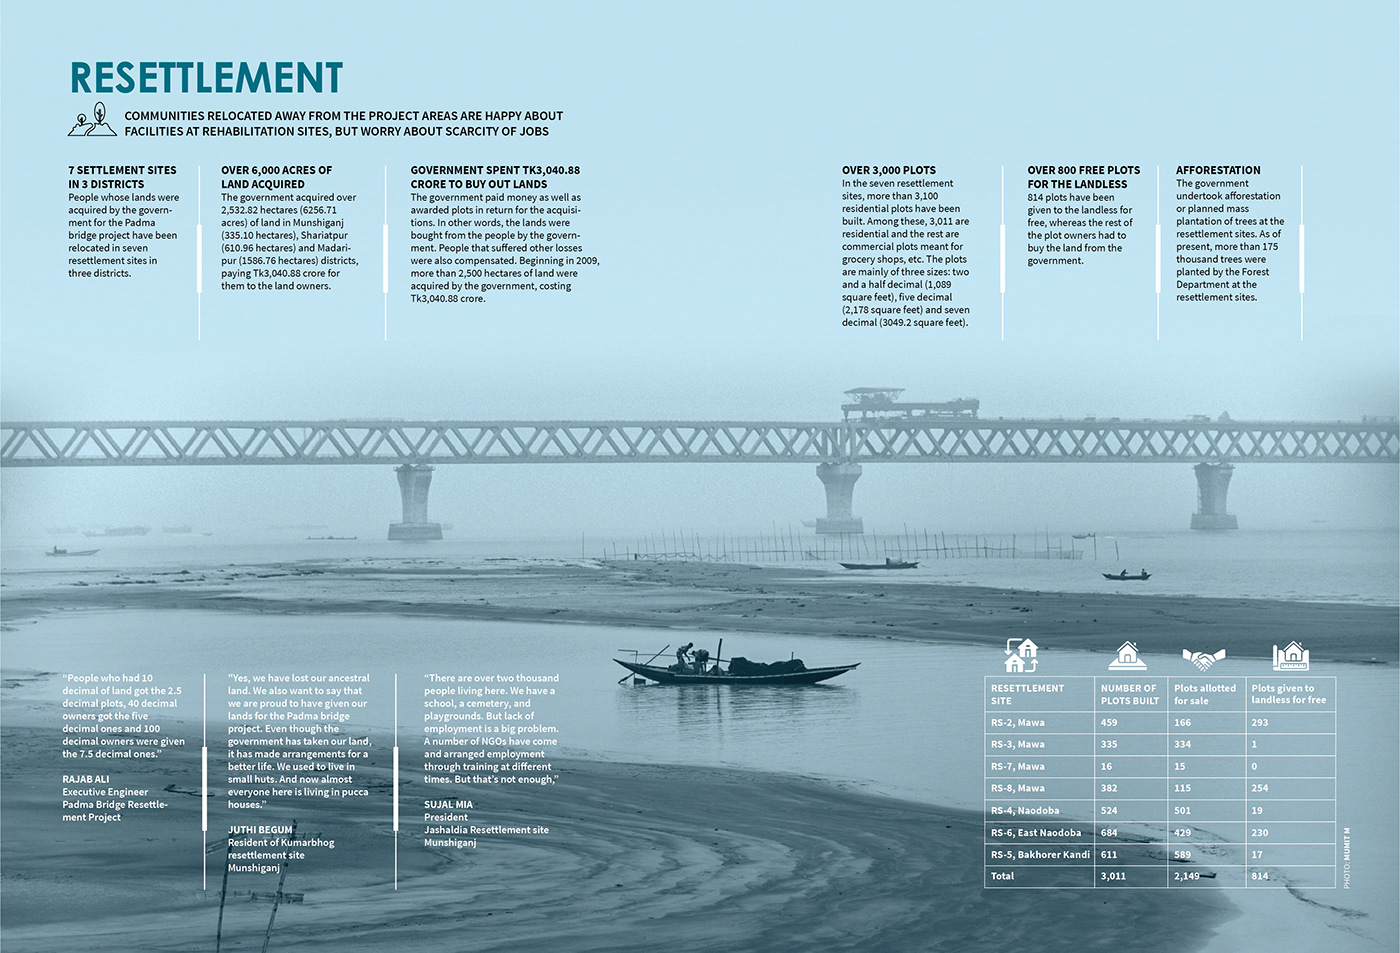 construction data visualization infographics information design Magazine design padma bridge visualisation